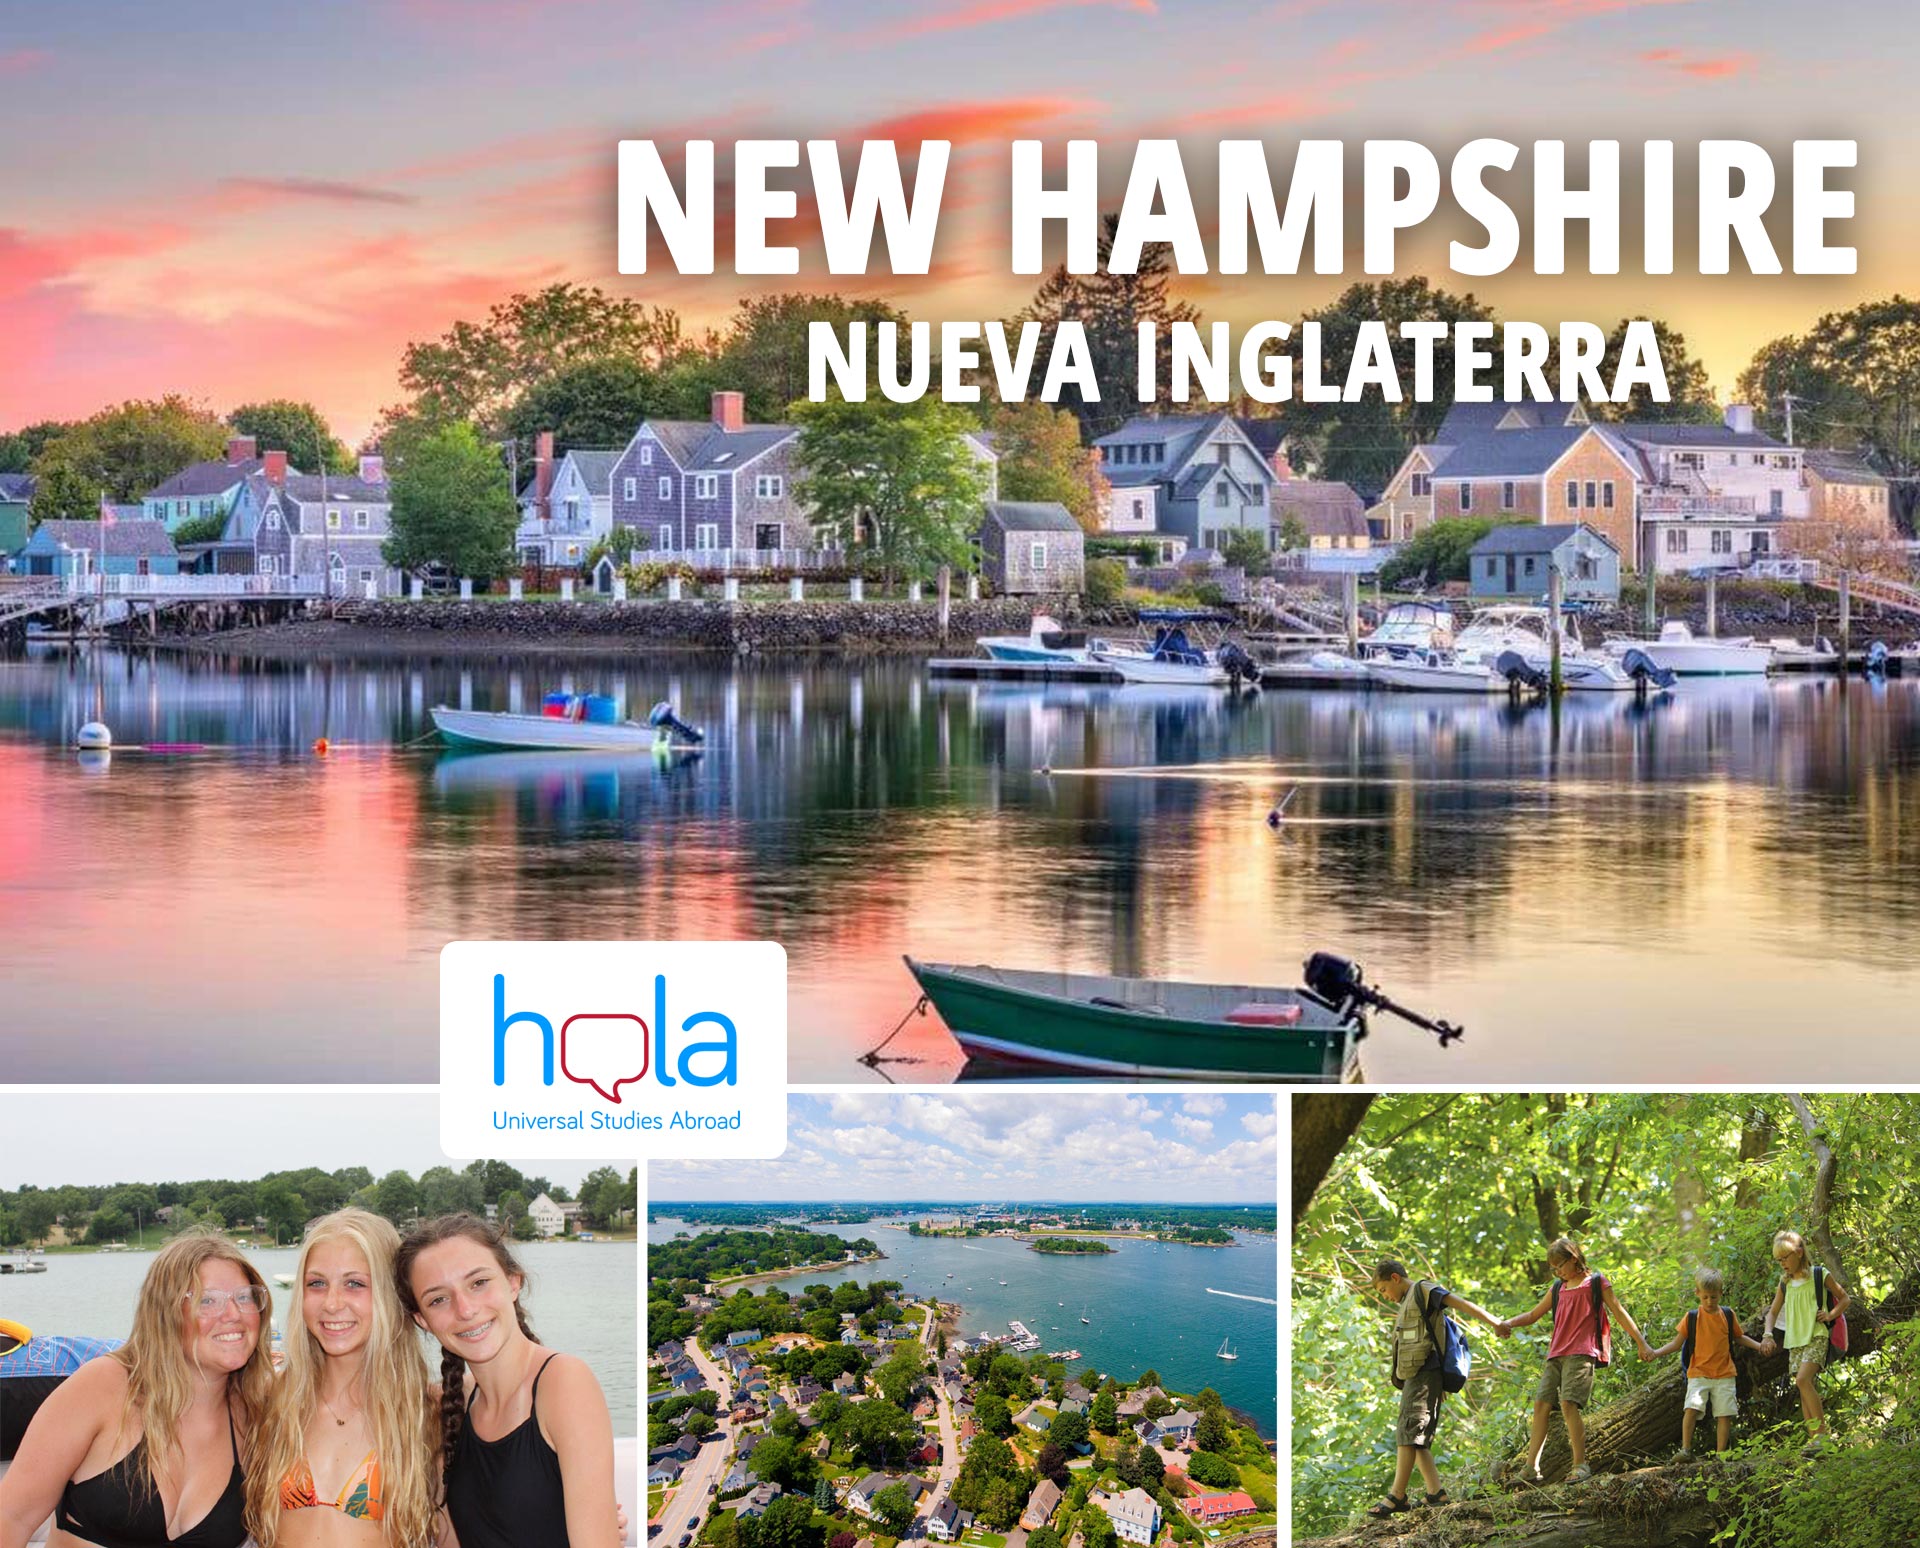 Verano en familia americana: New Hampshire - Nueva Inglaterra - USA